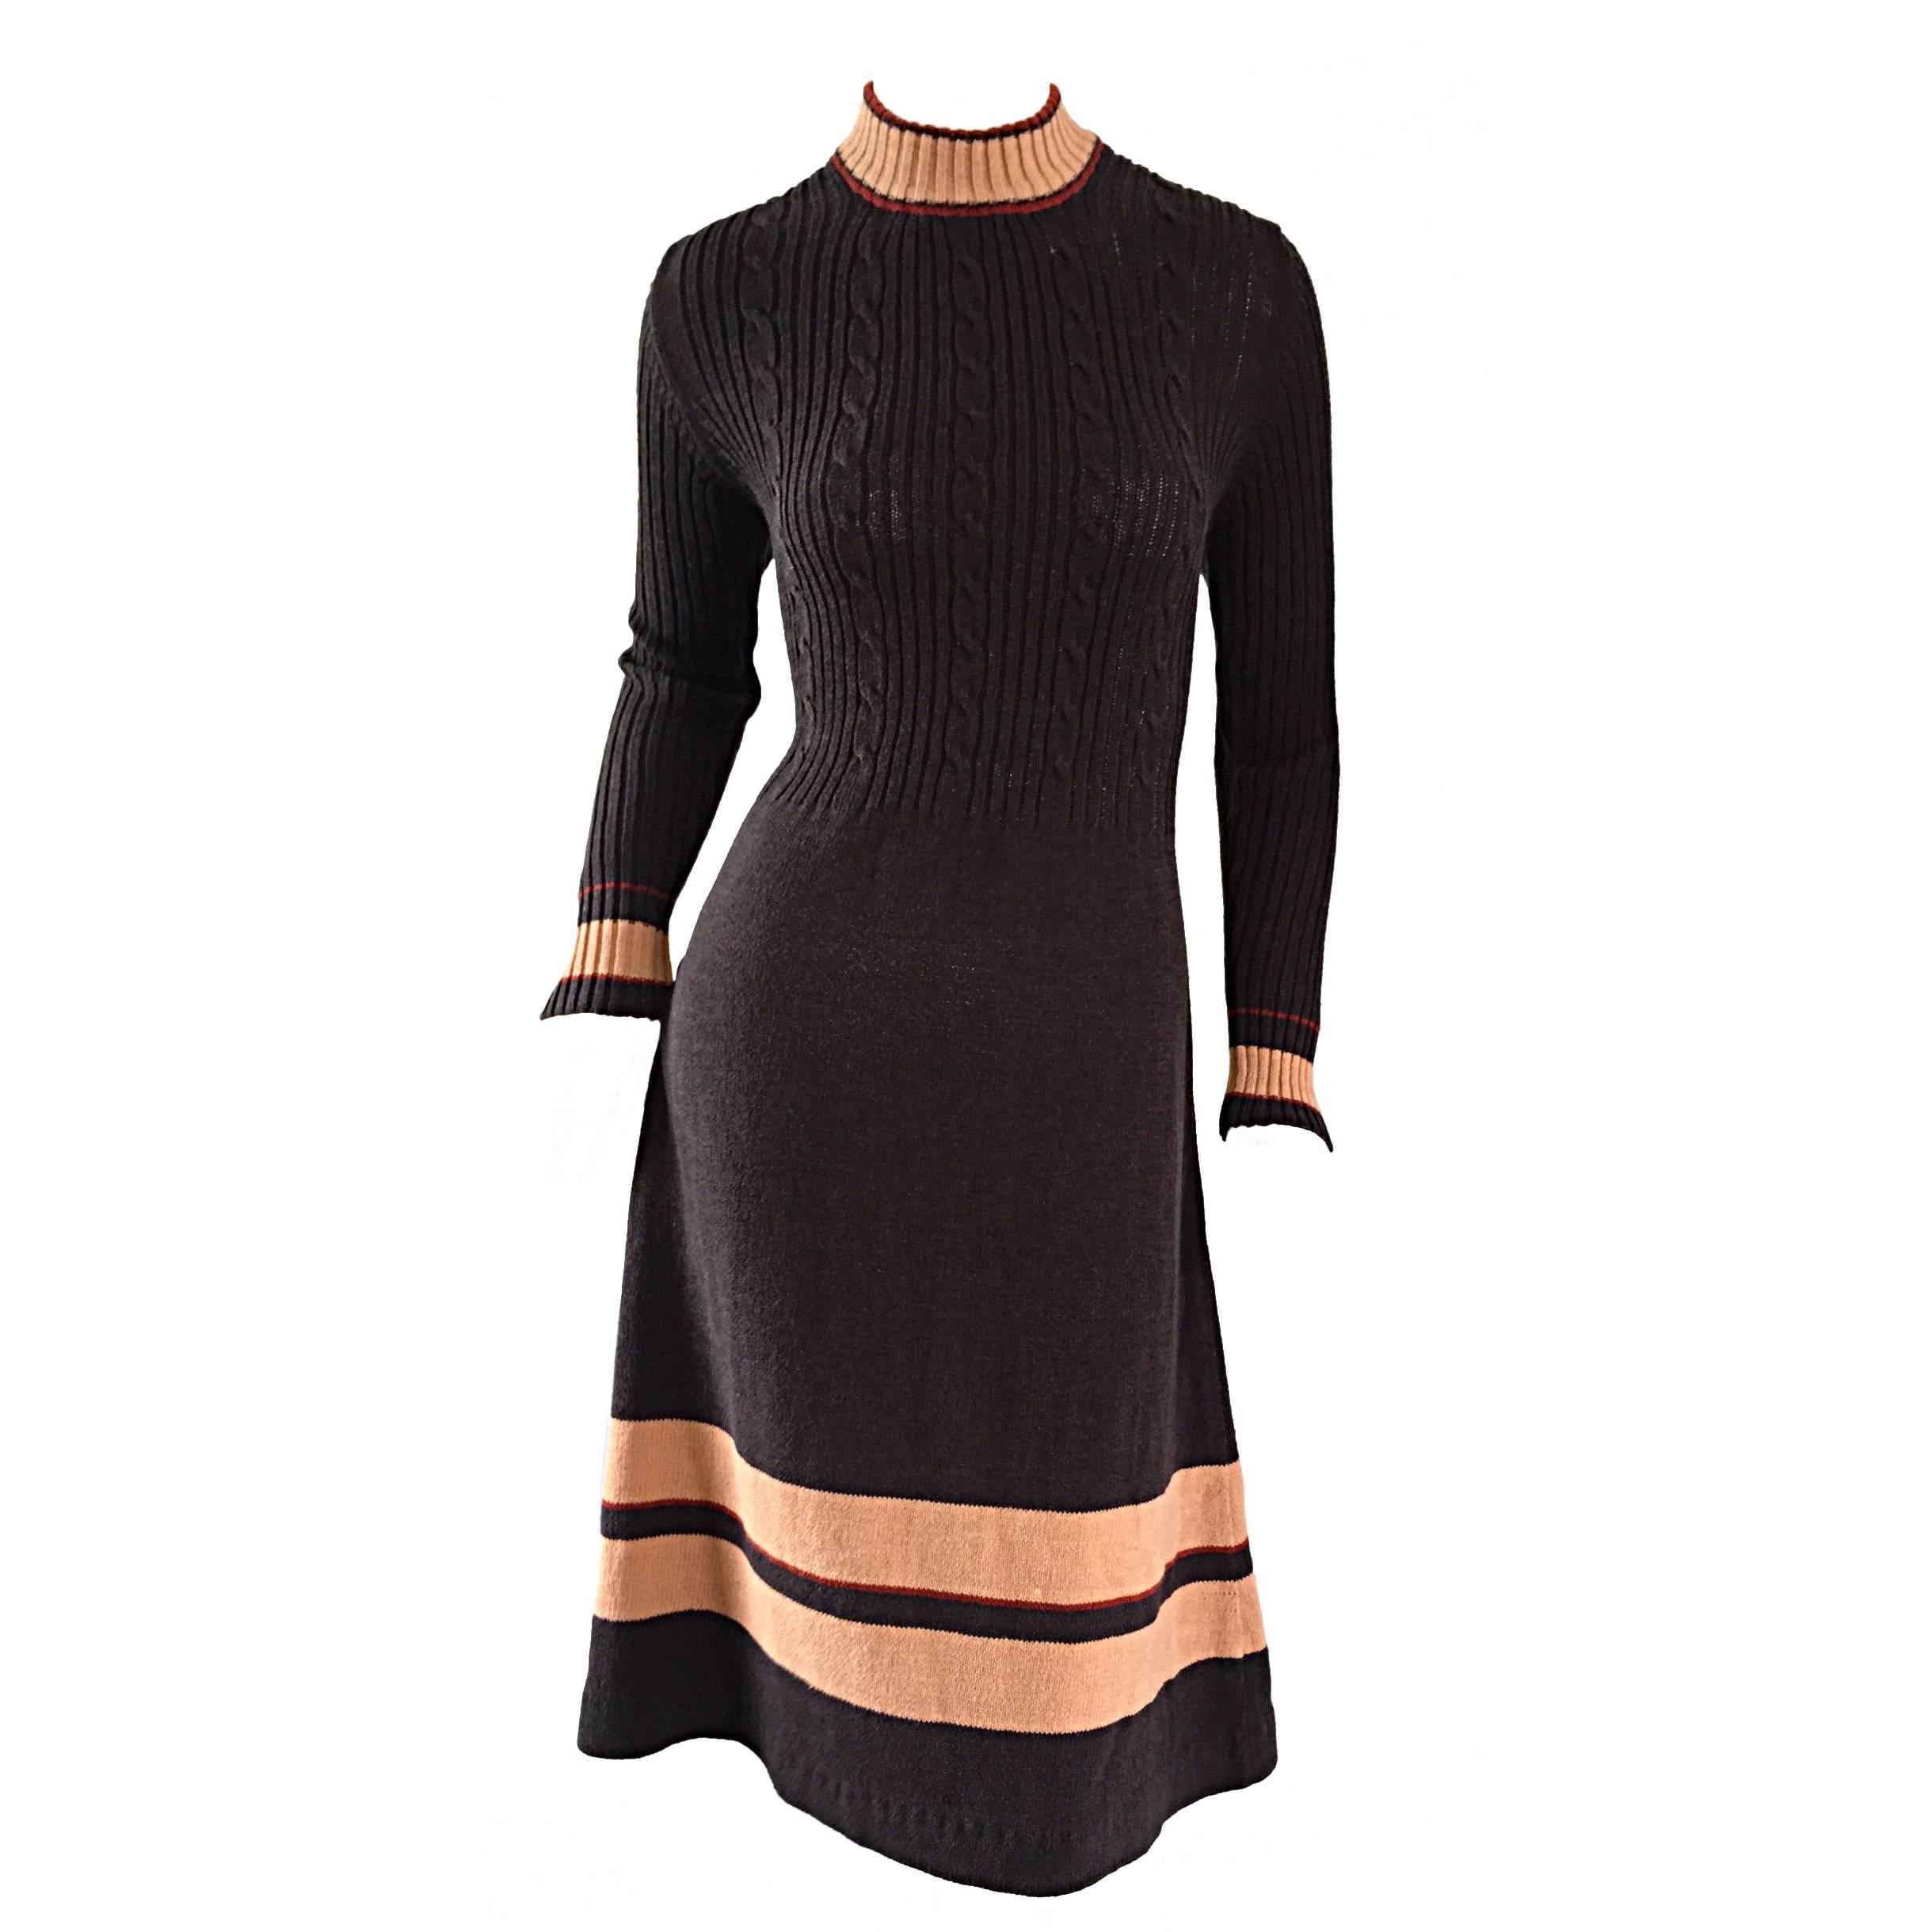 Chic 1960s 60s Judy Wayne Chocolate Brown Mod Vintage Sweater Dress For Sale